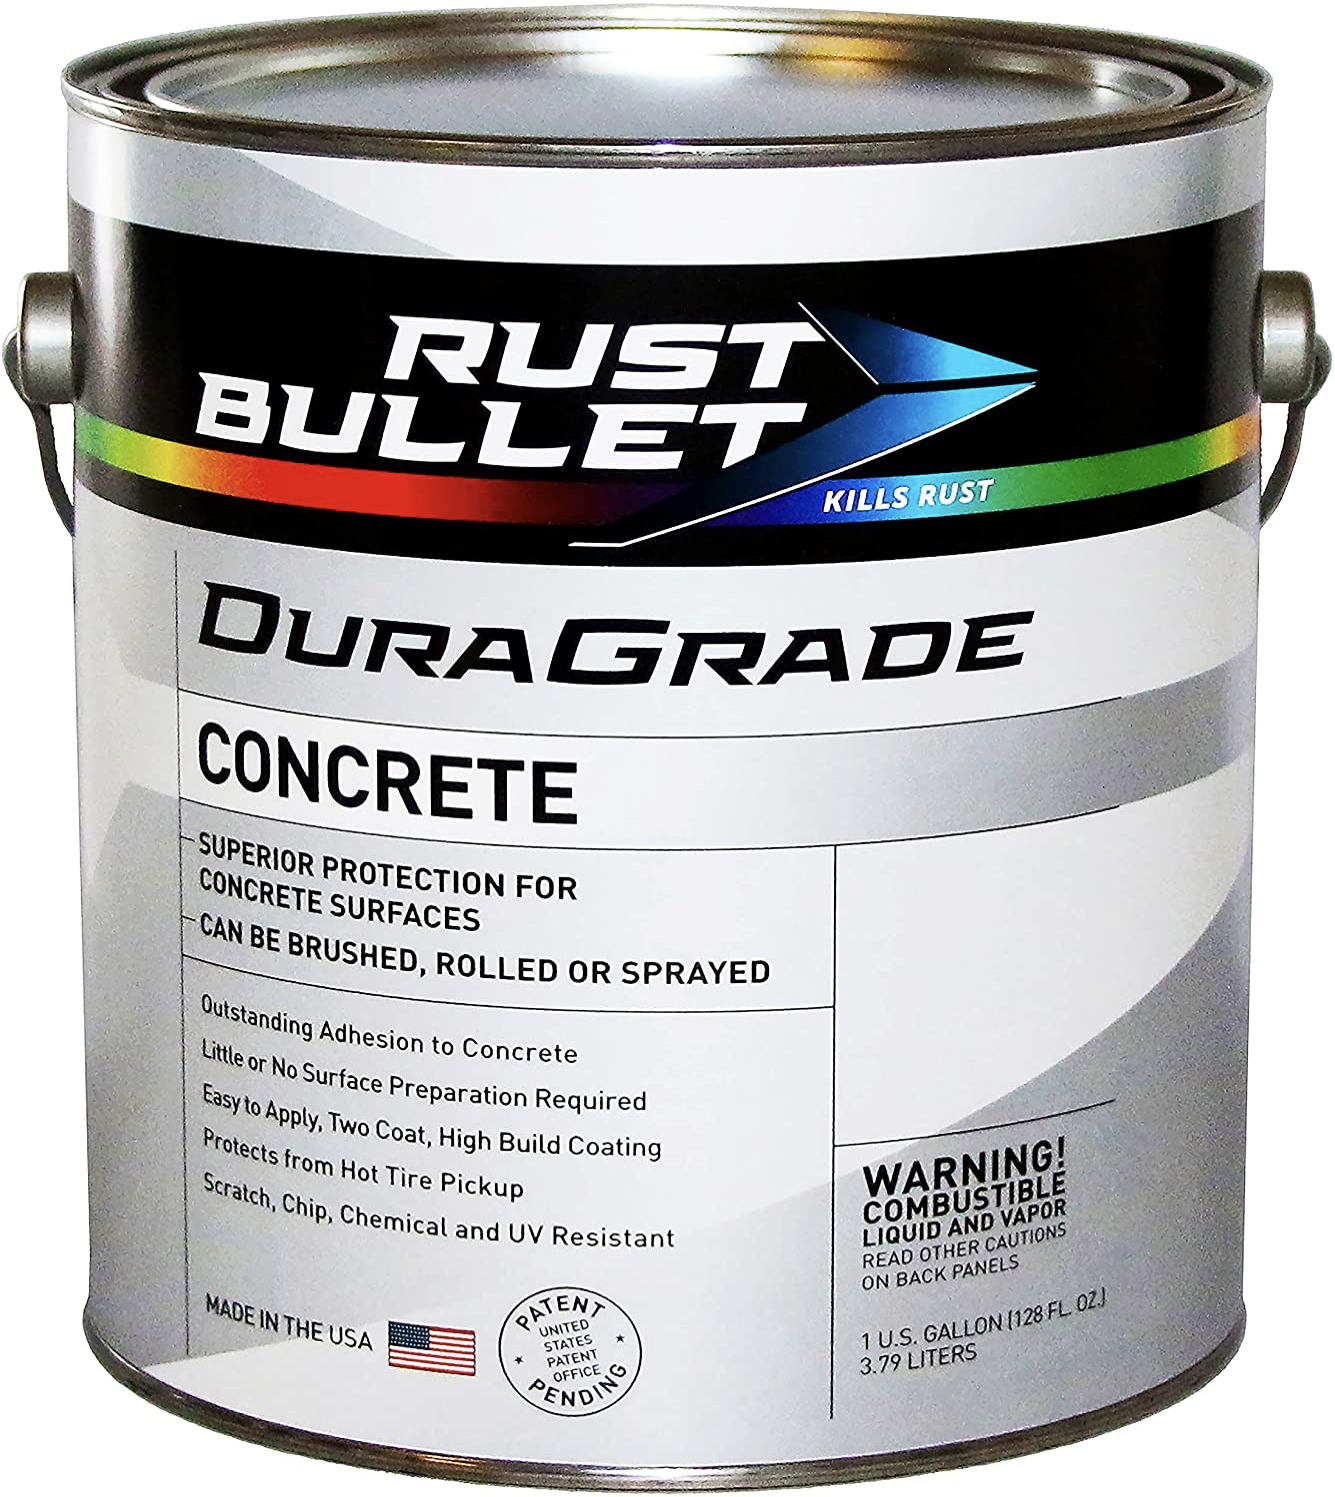 Rust Bullet DuraGrade Concrete Coating for Basements